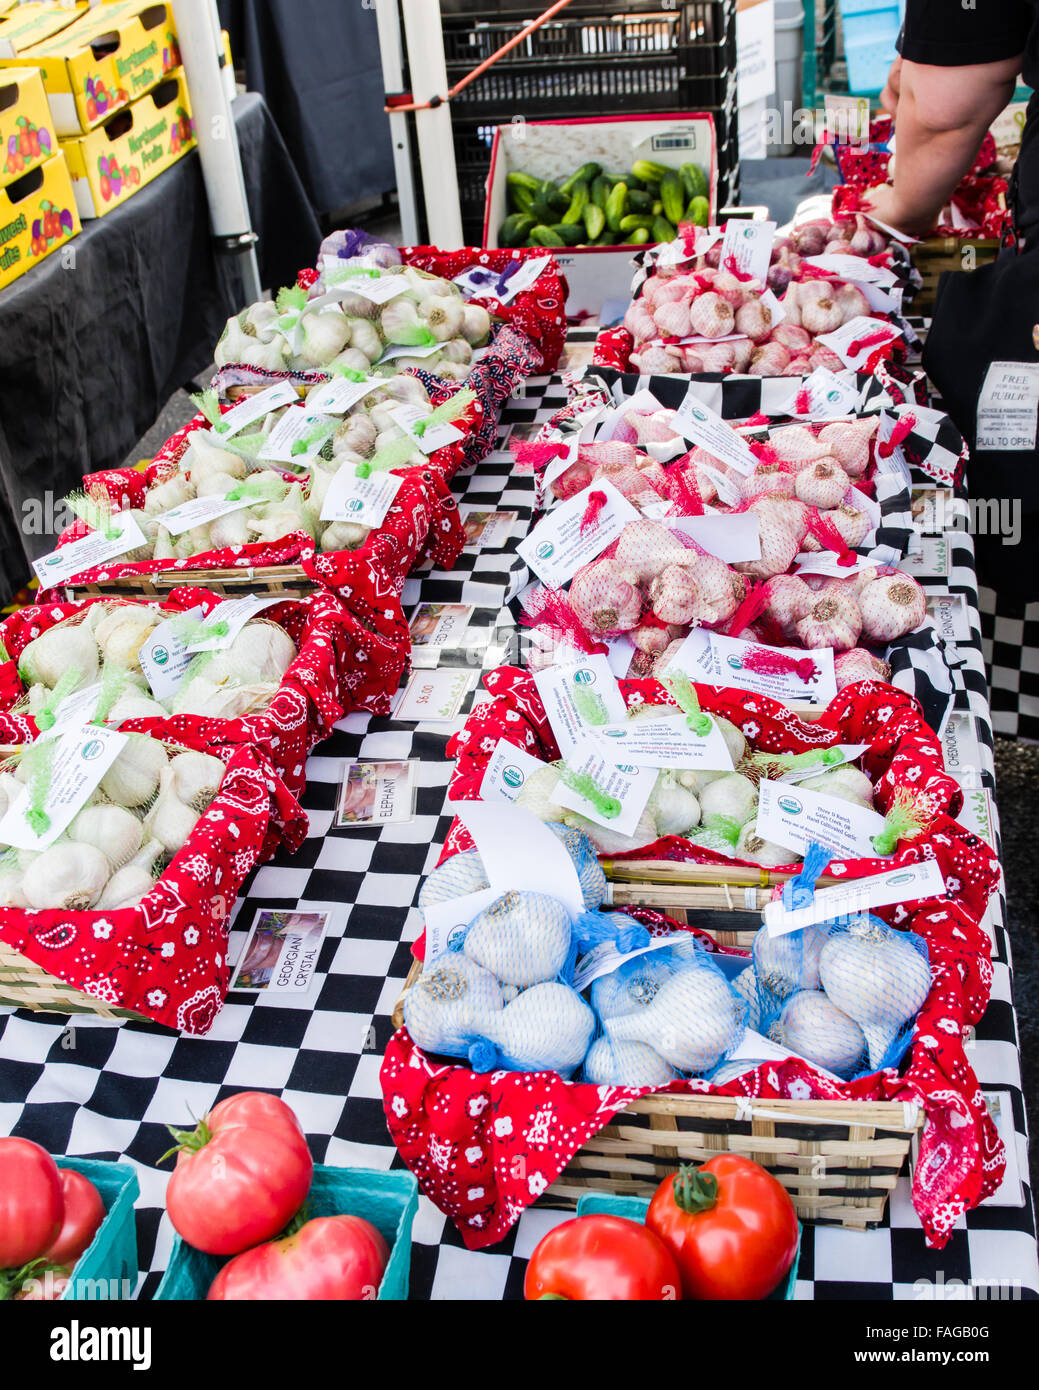 Display of garlic in mesh bags at a farmer's market in Beaverton, Oregon, USA Stock Photo